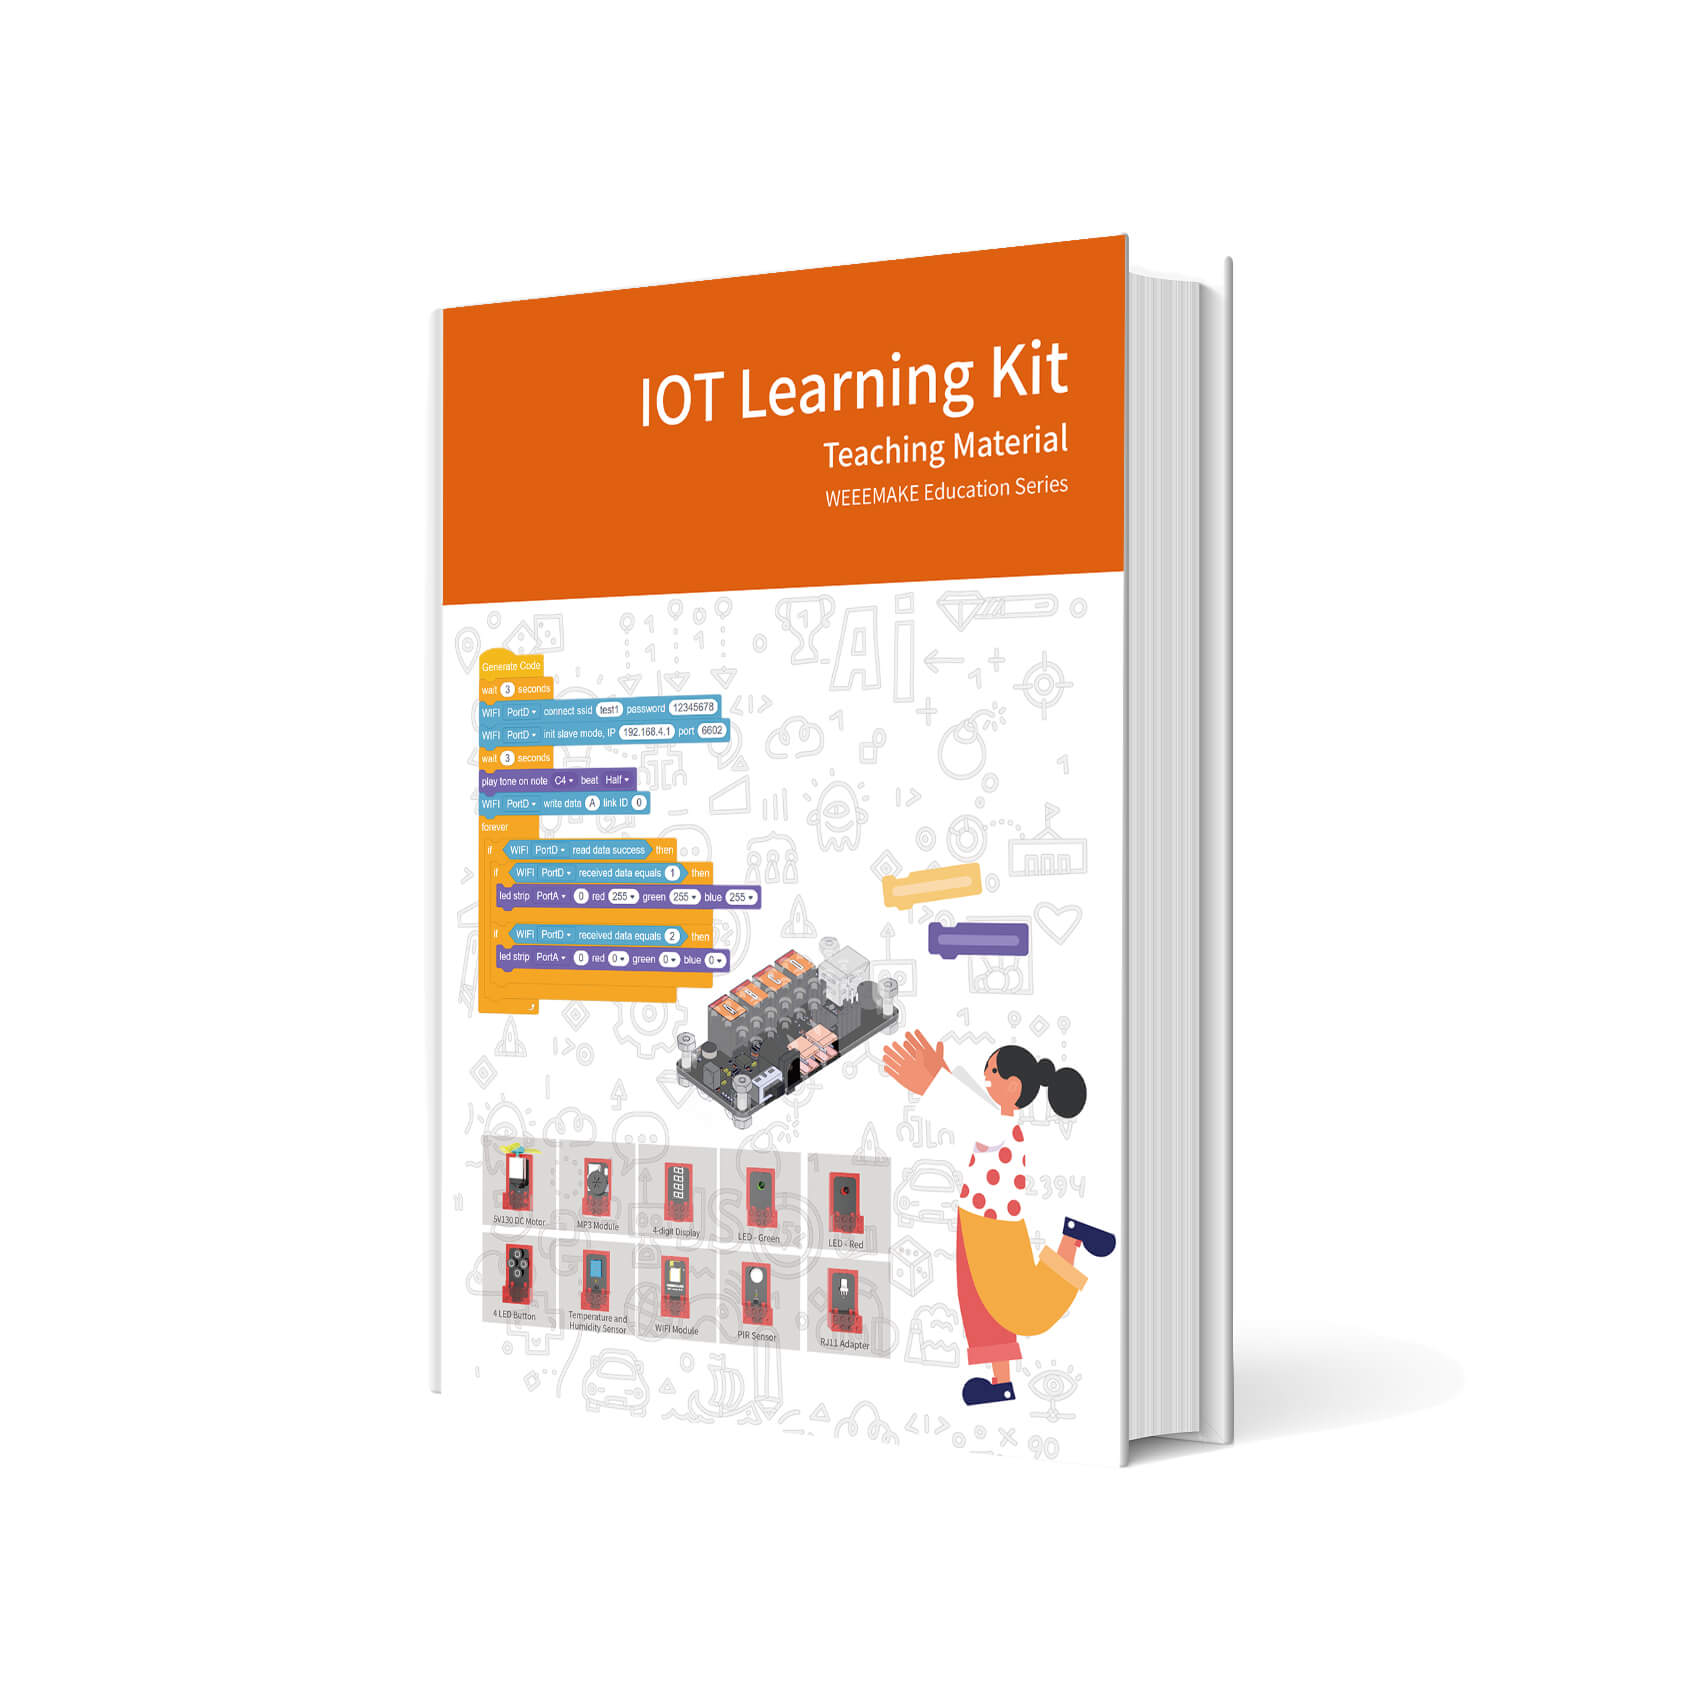 IoT Learning Kit